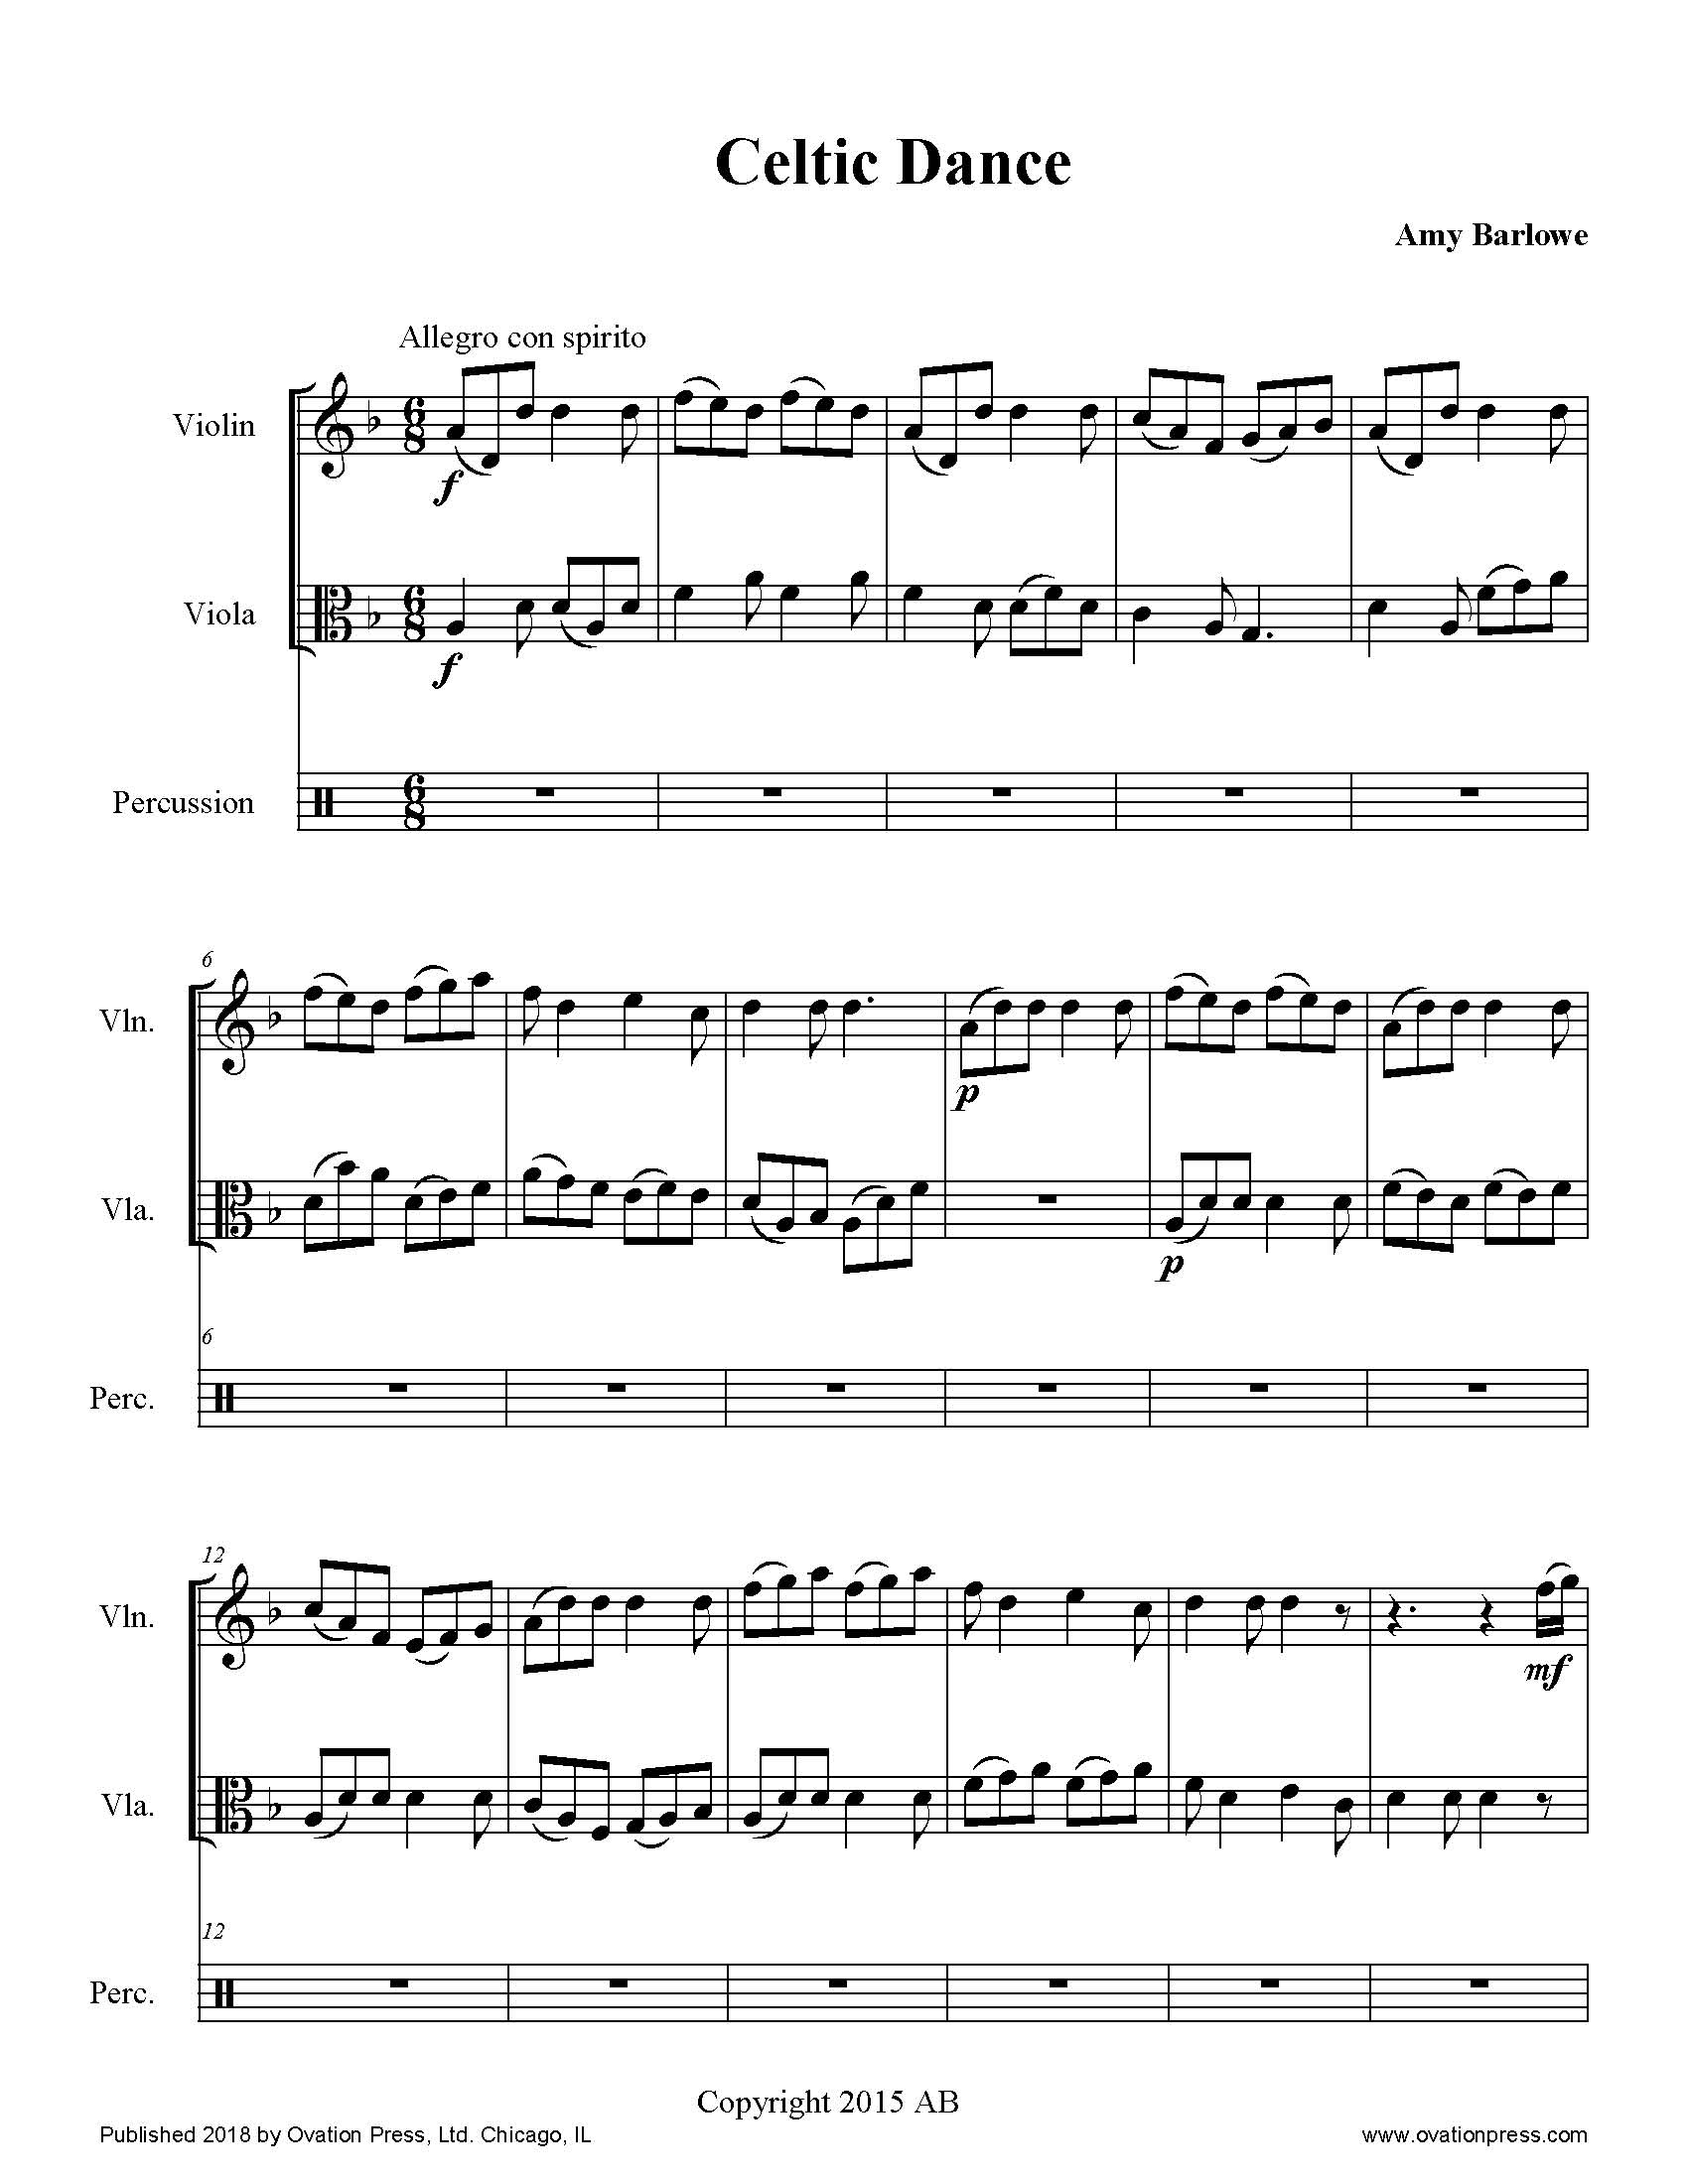 Barlowe Three Celtic Pieces for Violin, Viola and Drum